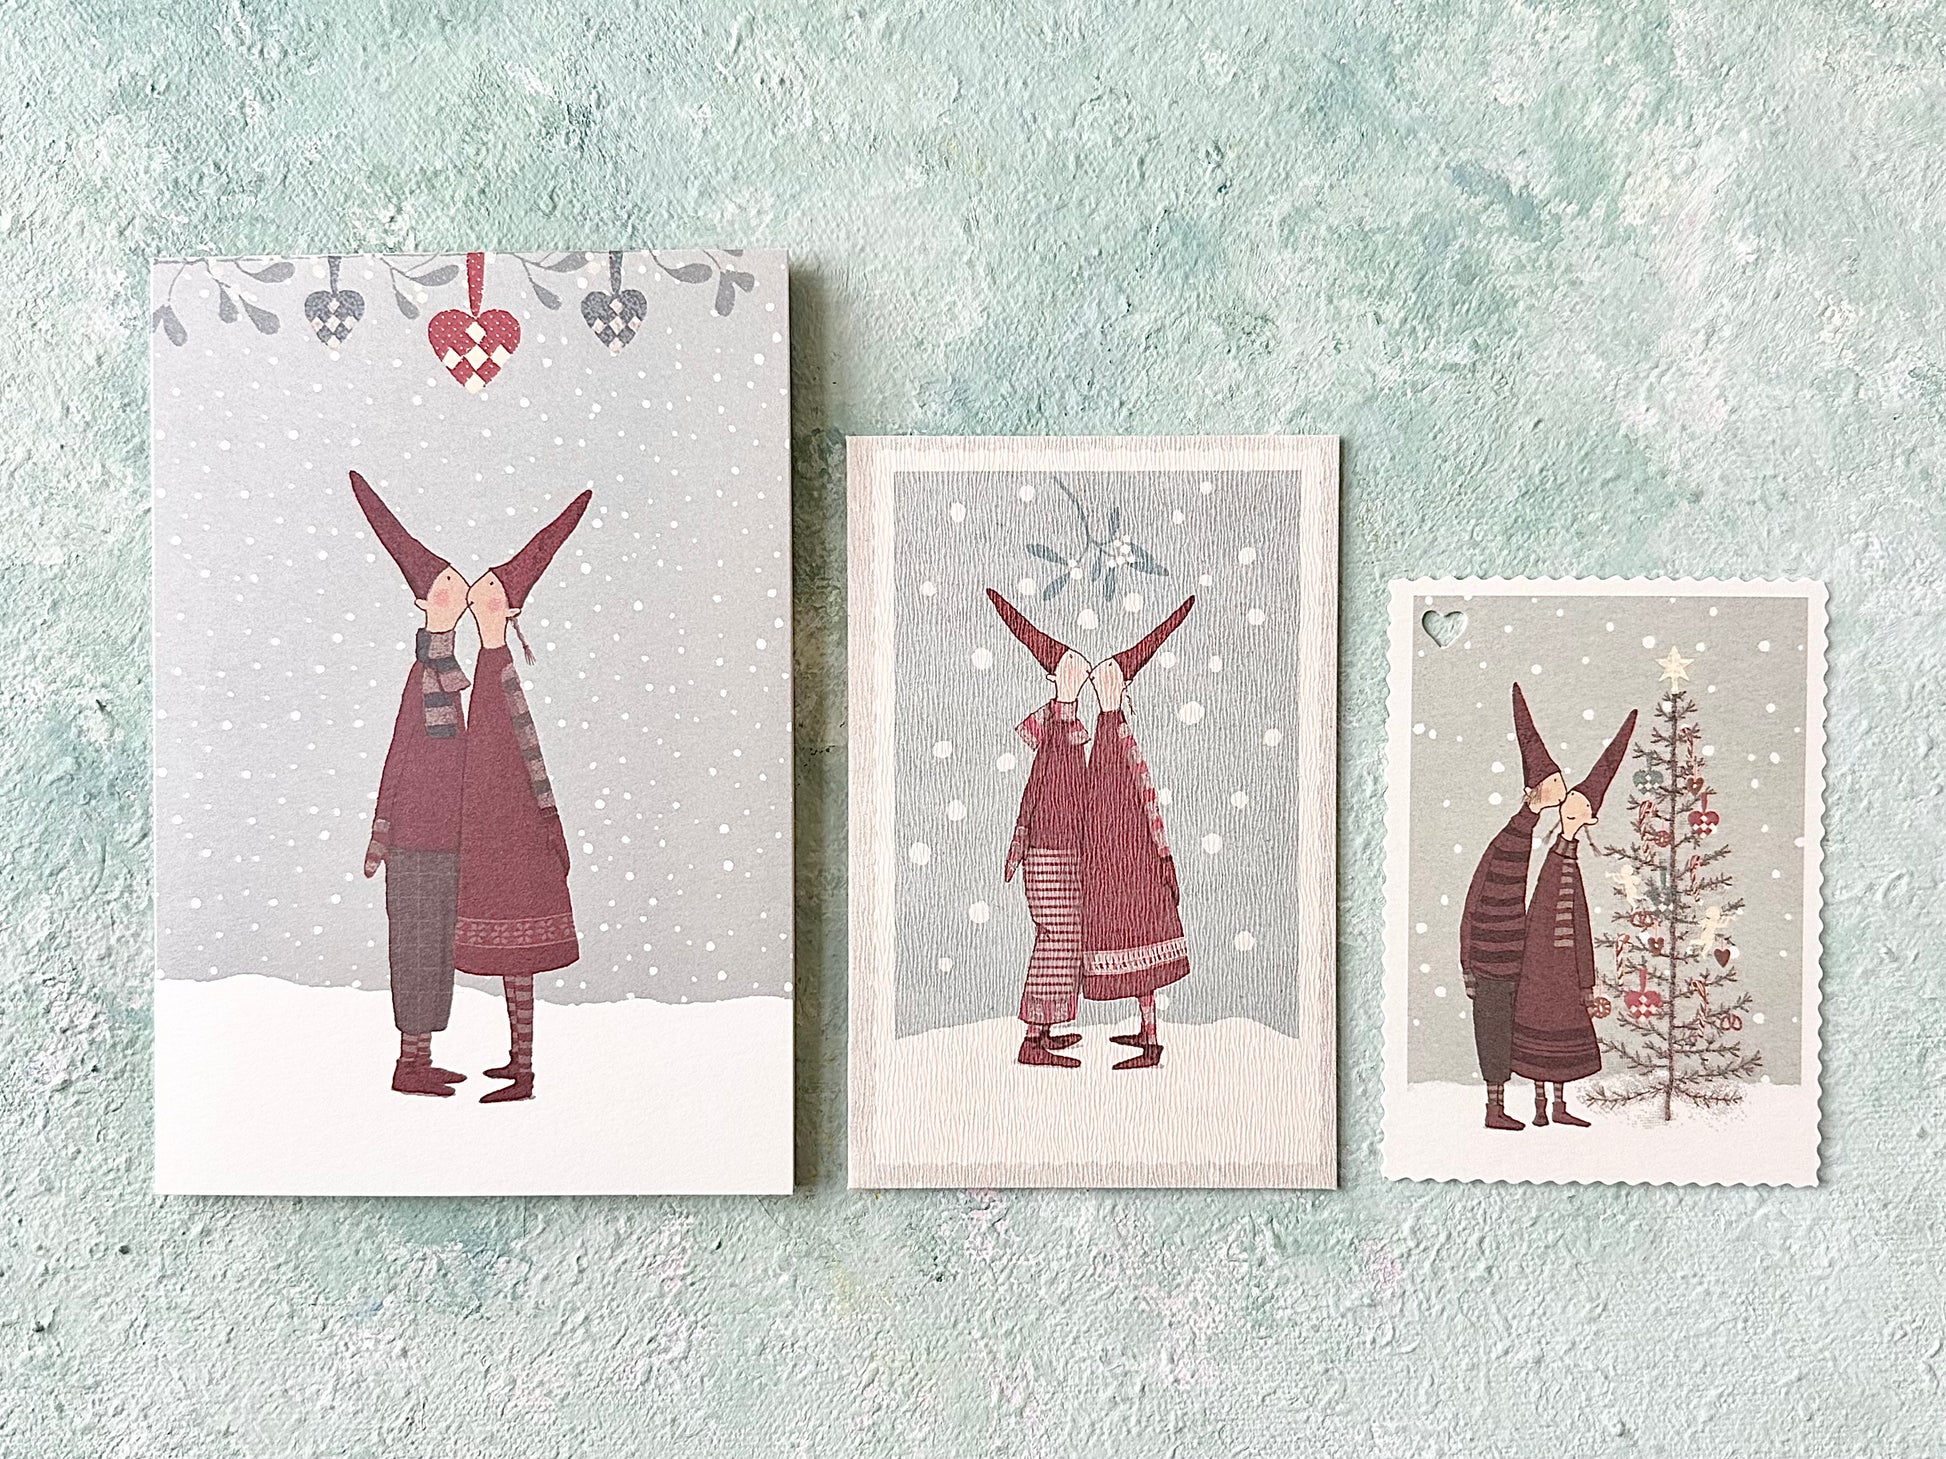 Small Christmas Card "Drum" - 2014